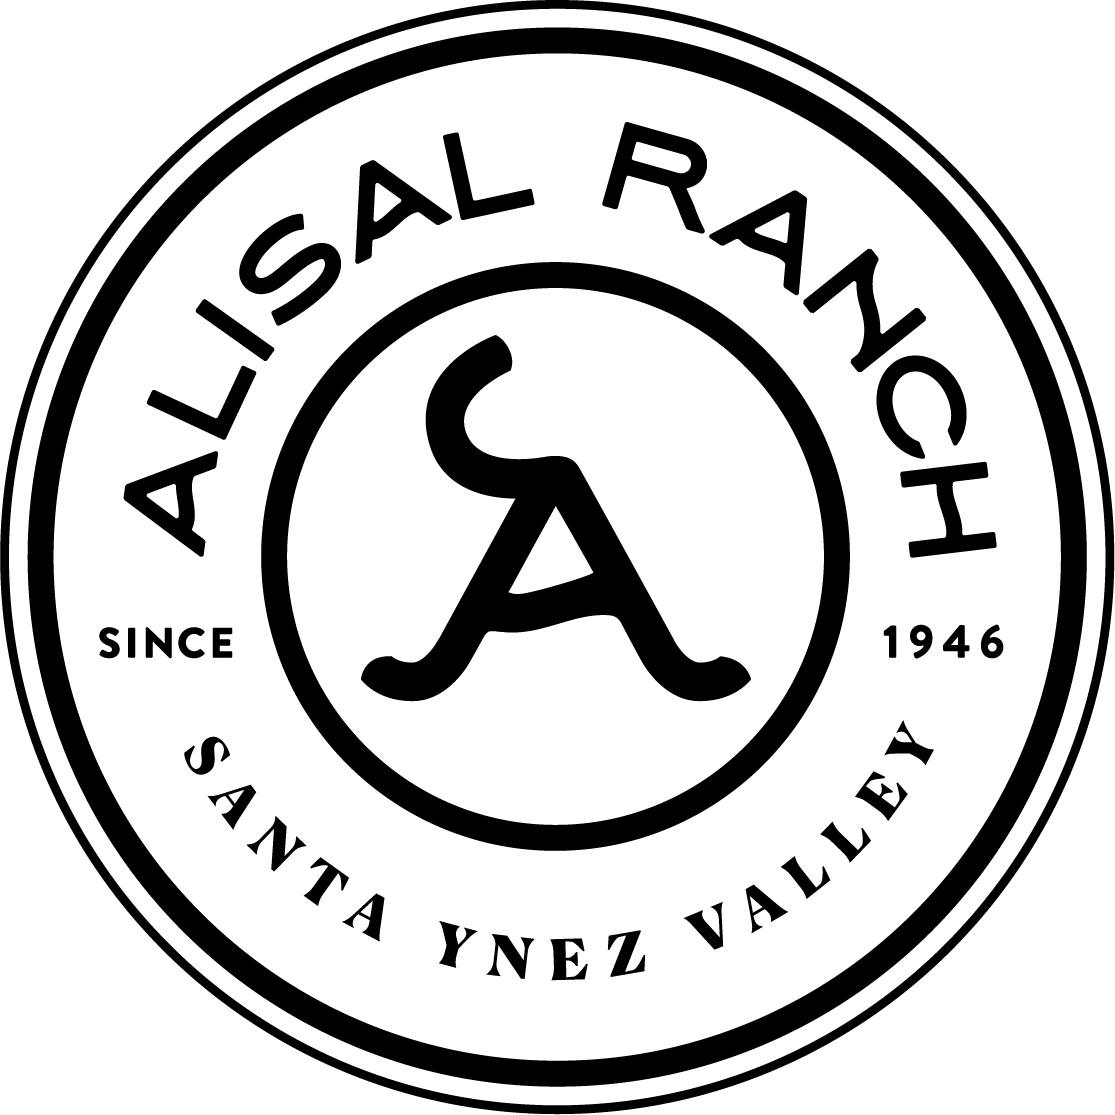 Alisal Guest Ranch & Resort